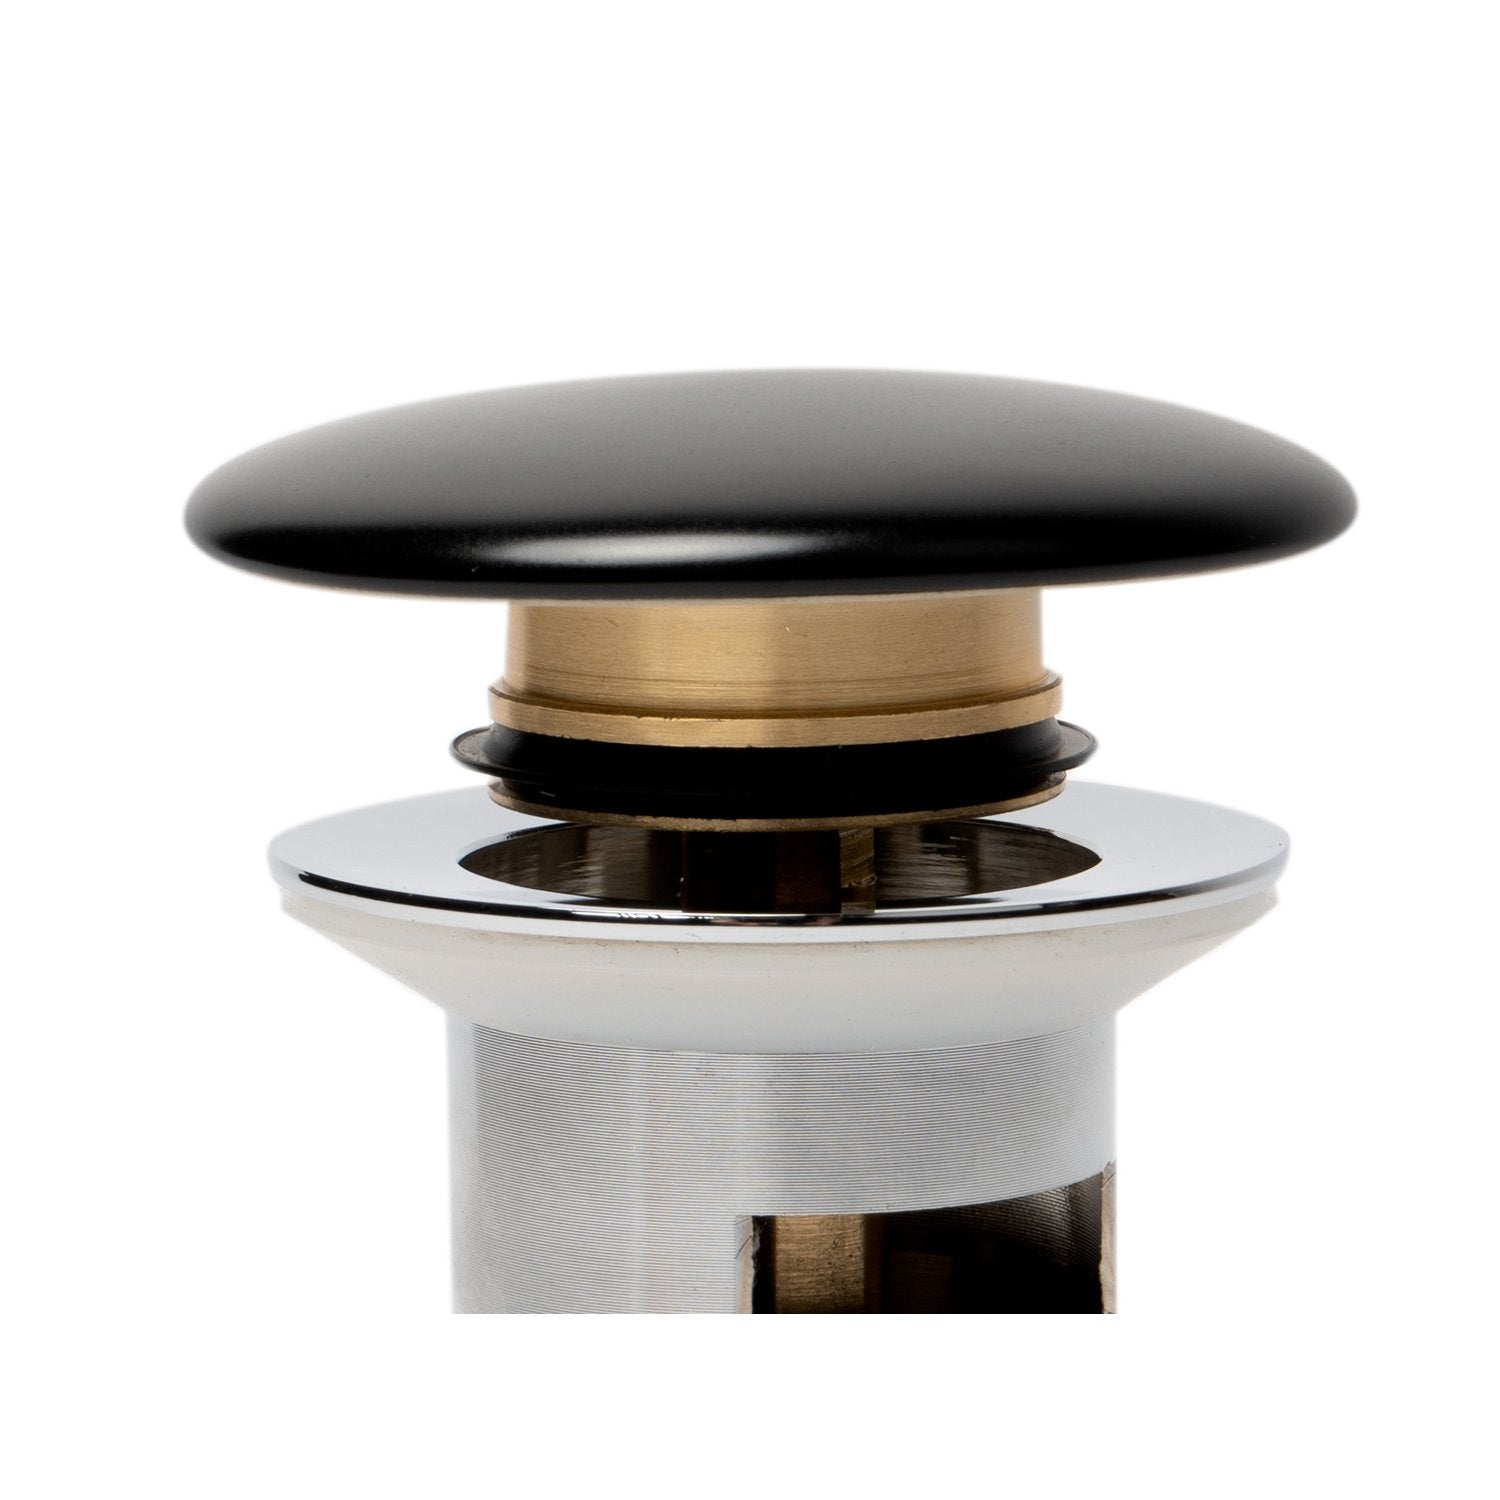 ALFI AB8056 Ceramic Mushroom Top Pop Up Drain for Sinks with Overflow